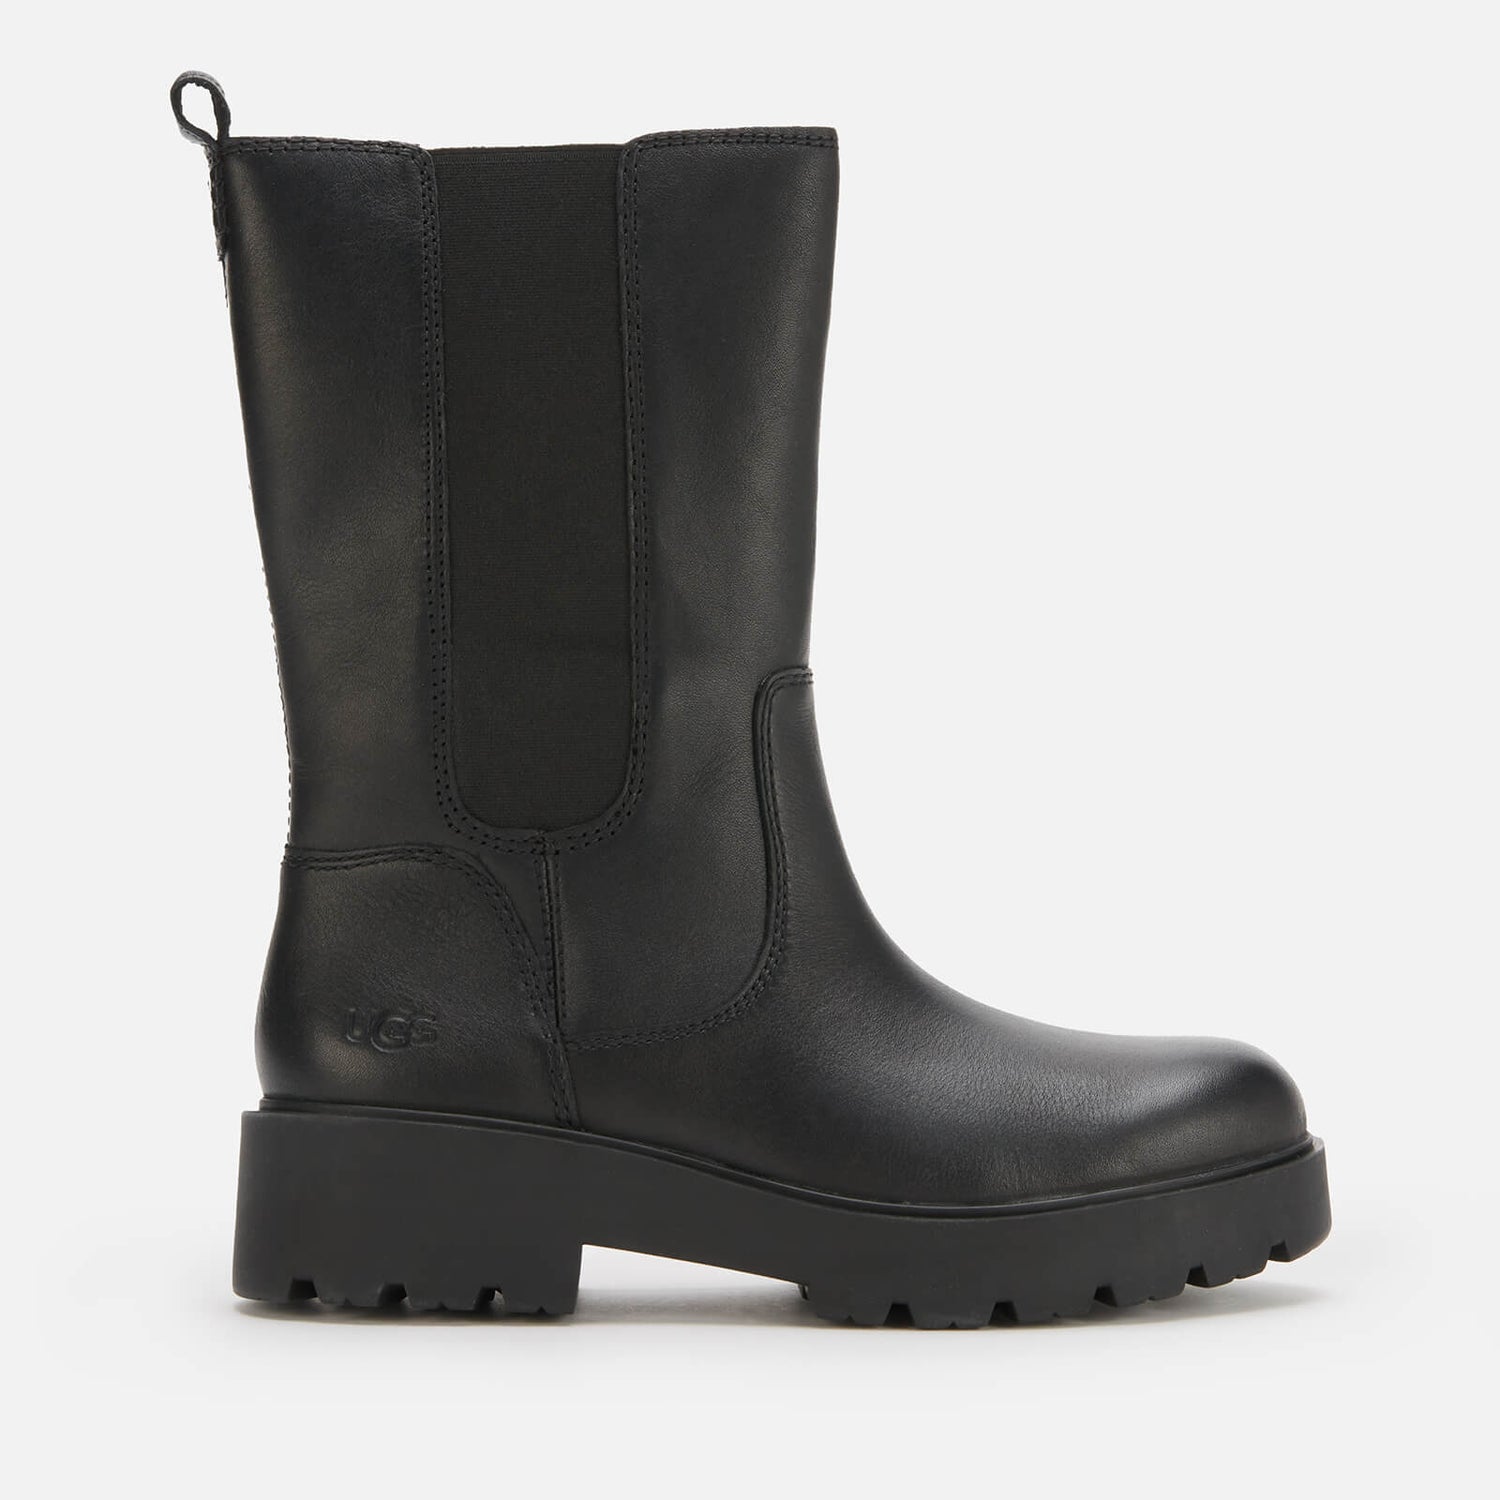 UGG Women's Holzer Waterproof Leather Chelsea Boots - Black - UK 3